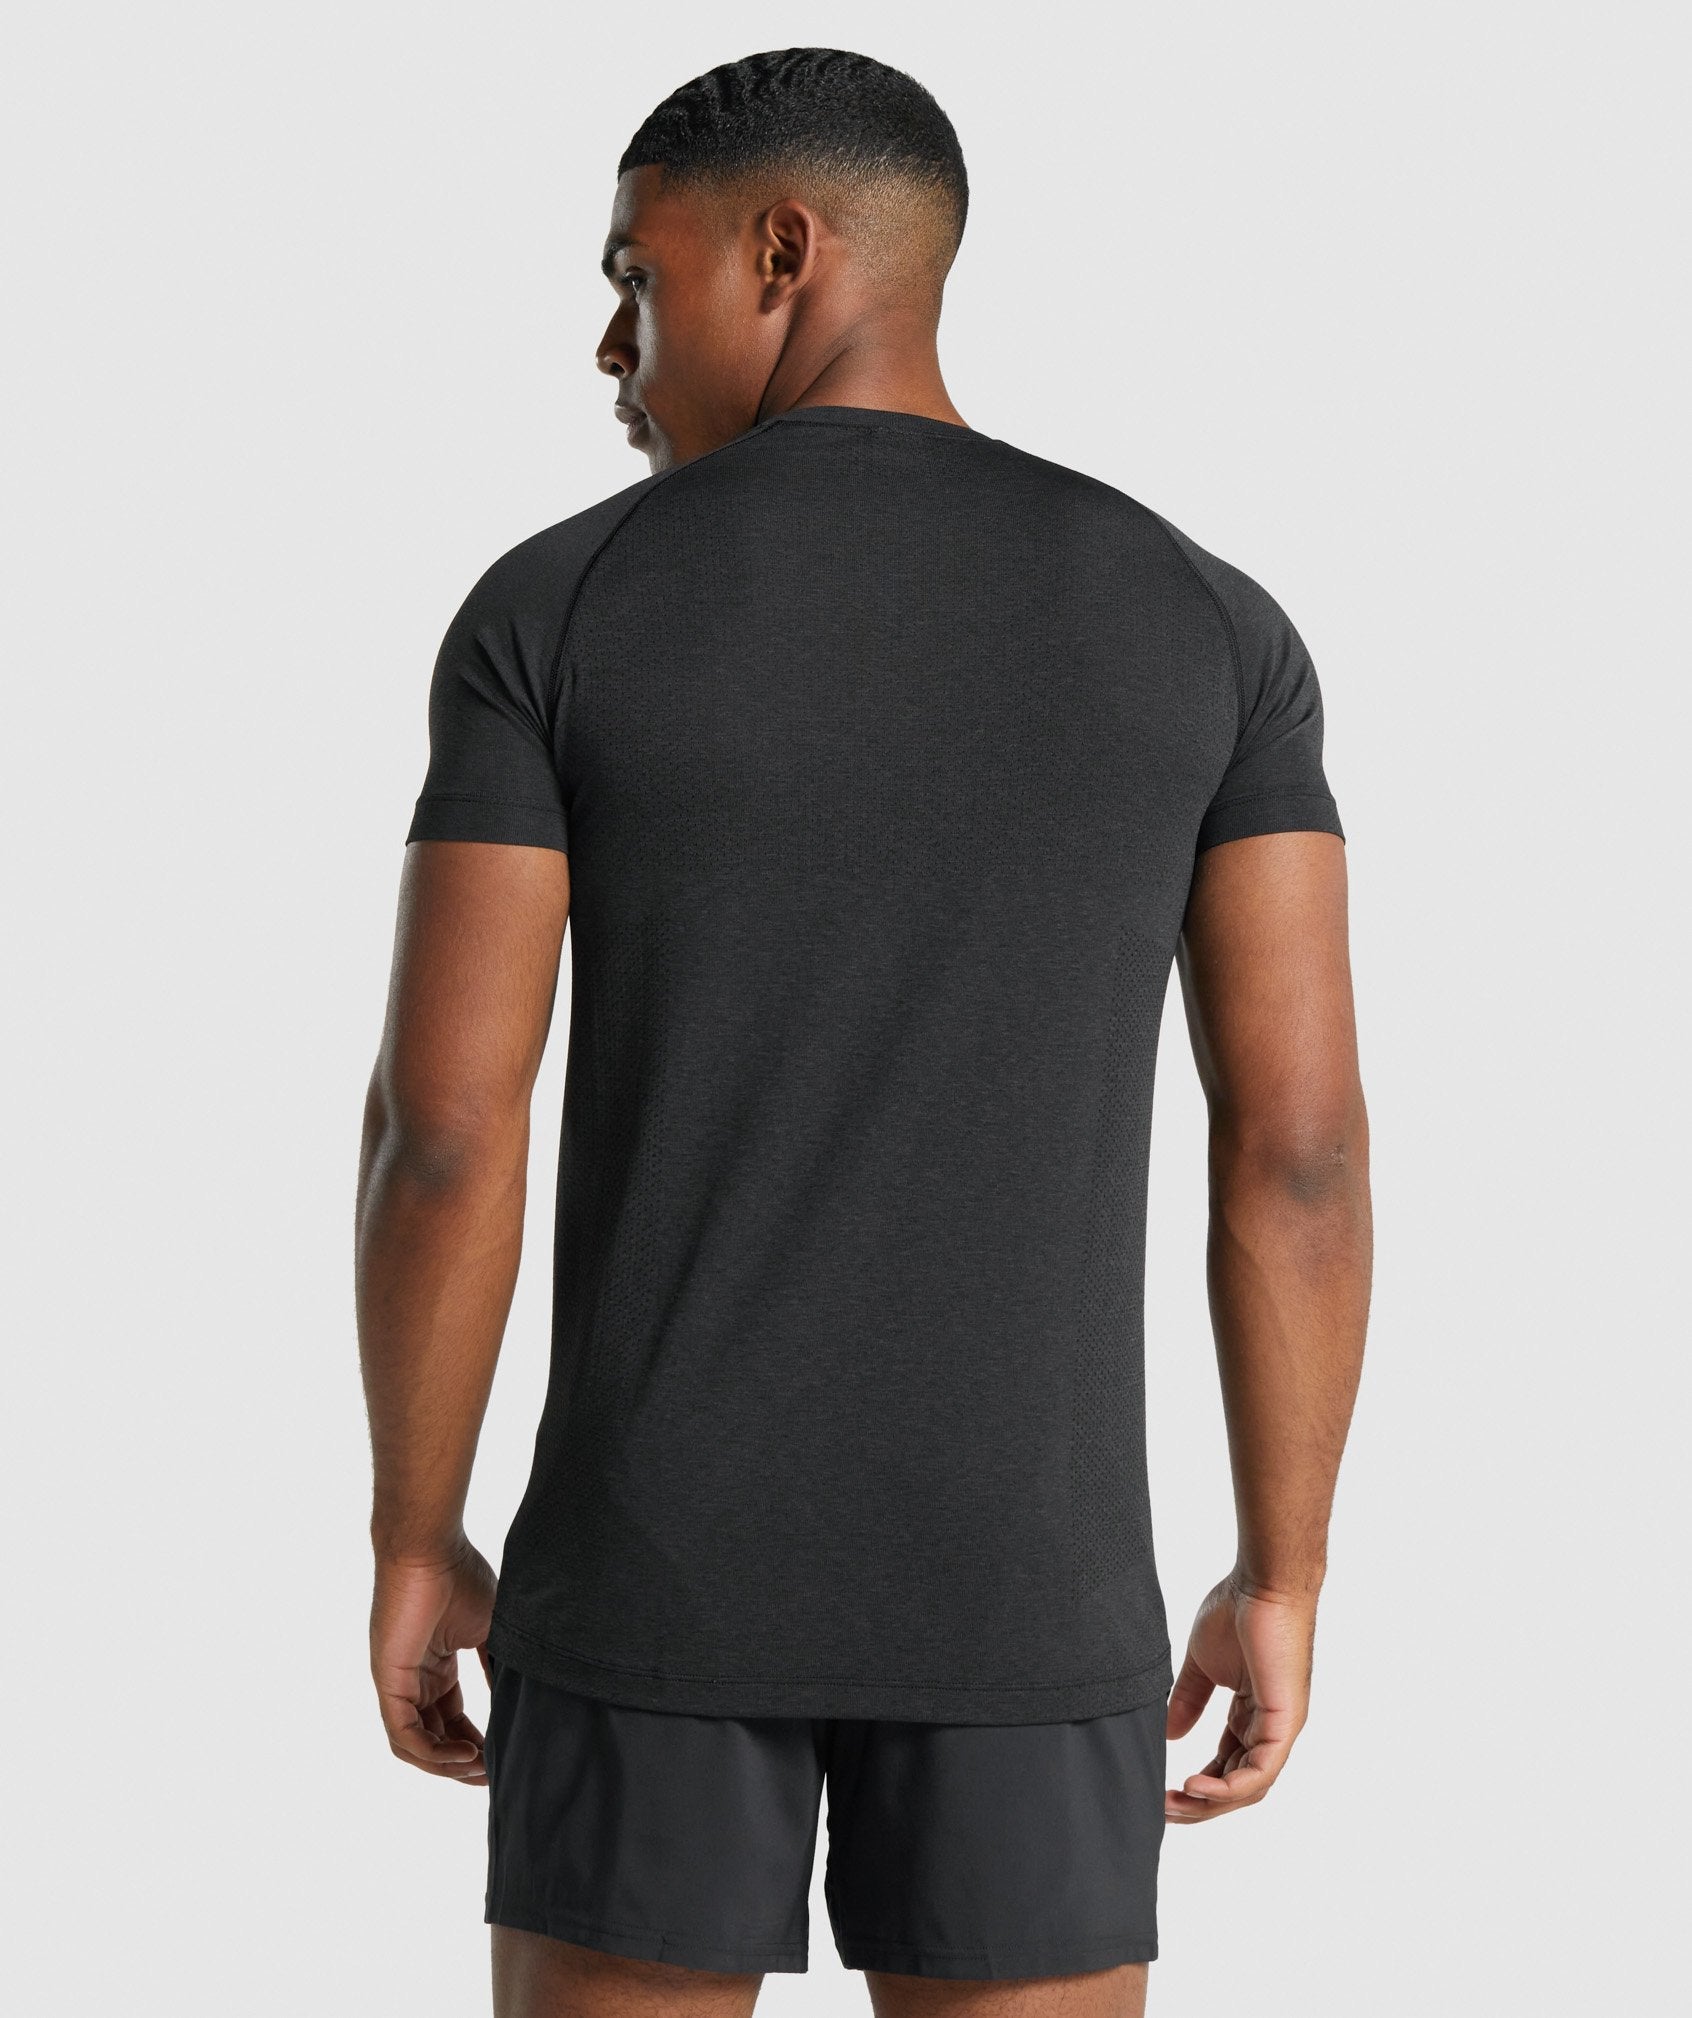 Vital Light Seamless T-Shirt in Black Marl - view 2